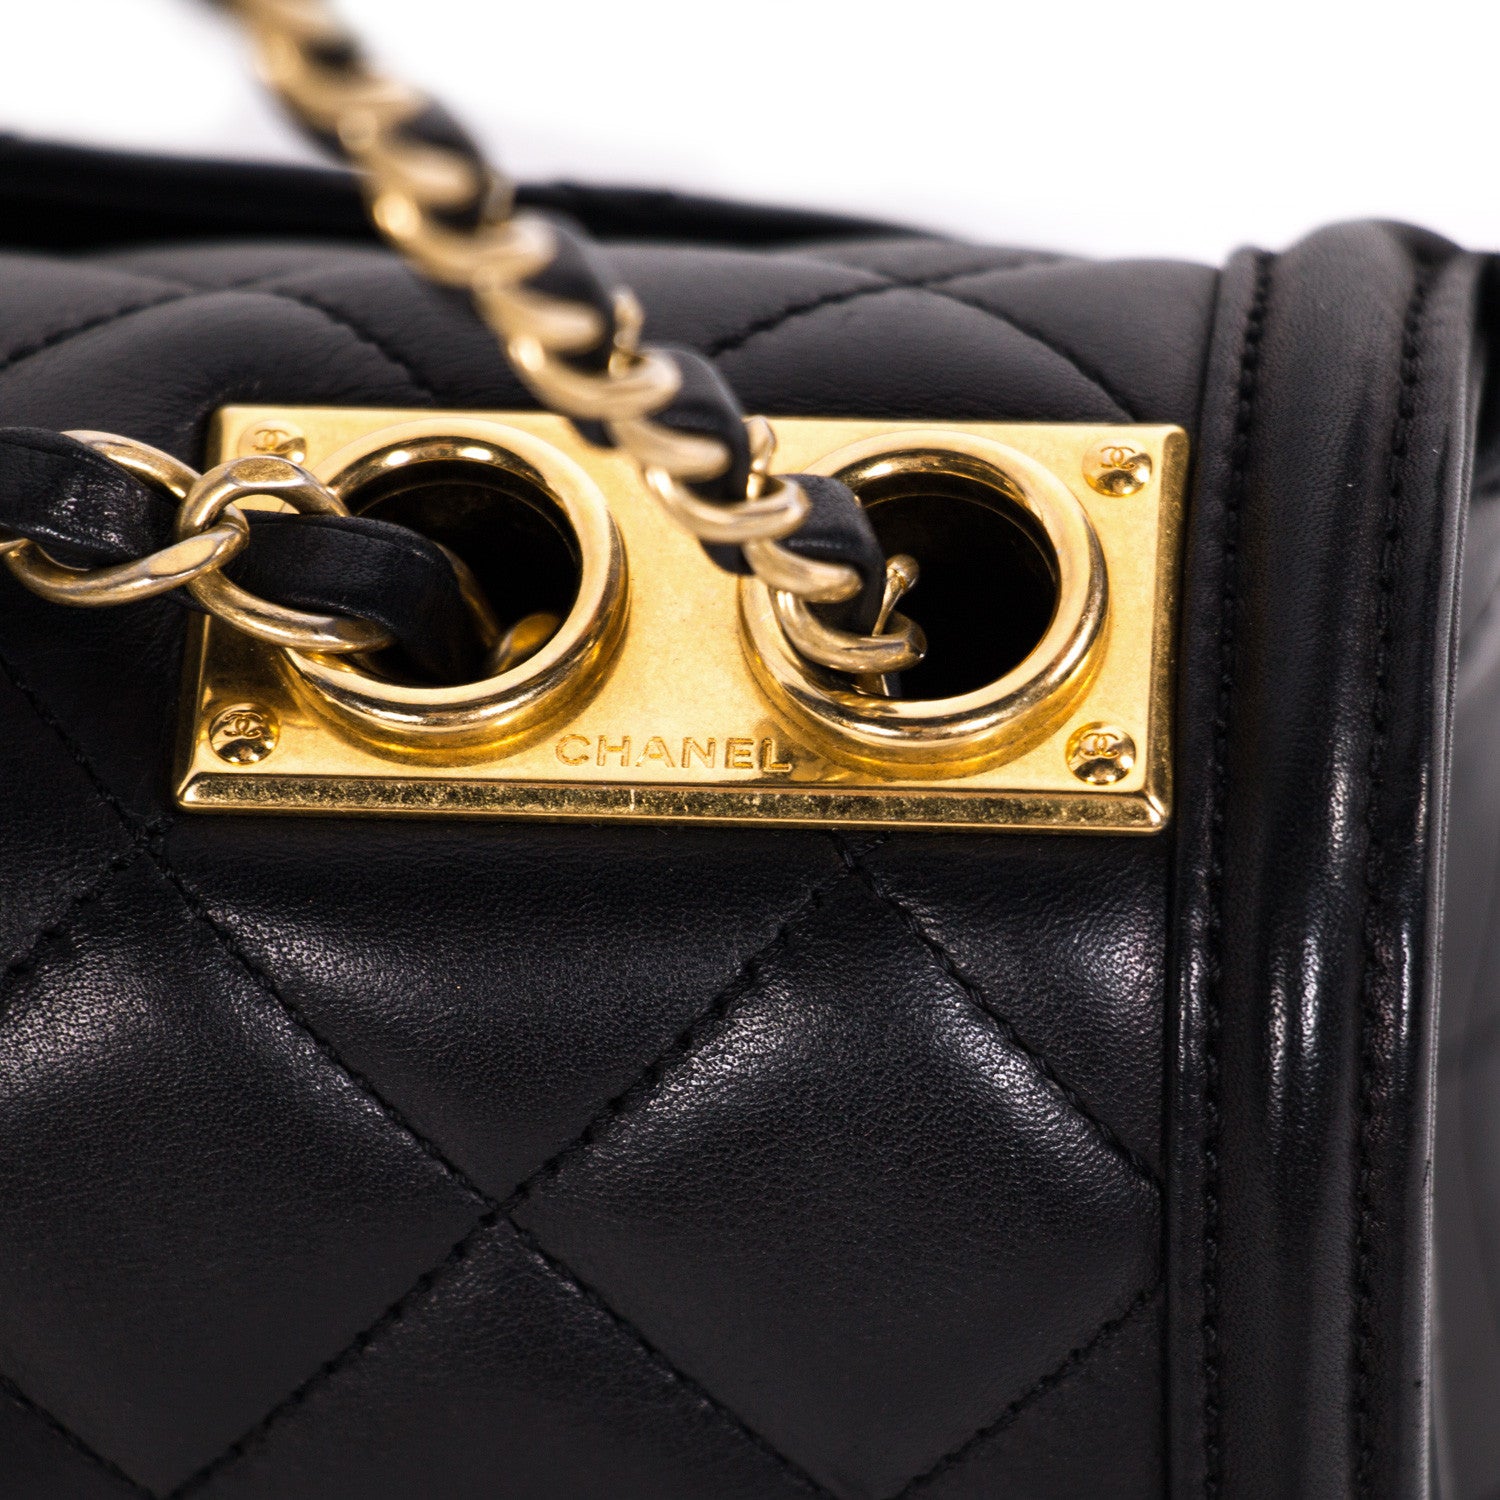 Shop authentic Chanel Elegant CC Flap Bag at revogue for just USD 2,500.00